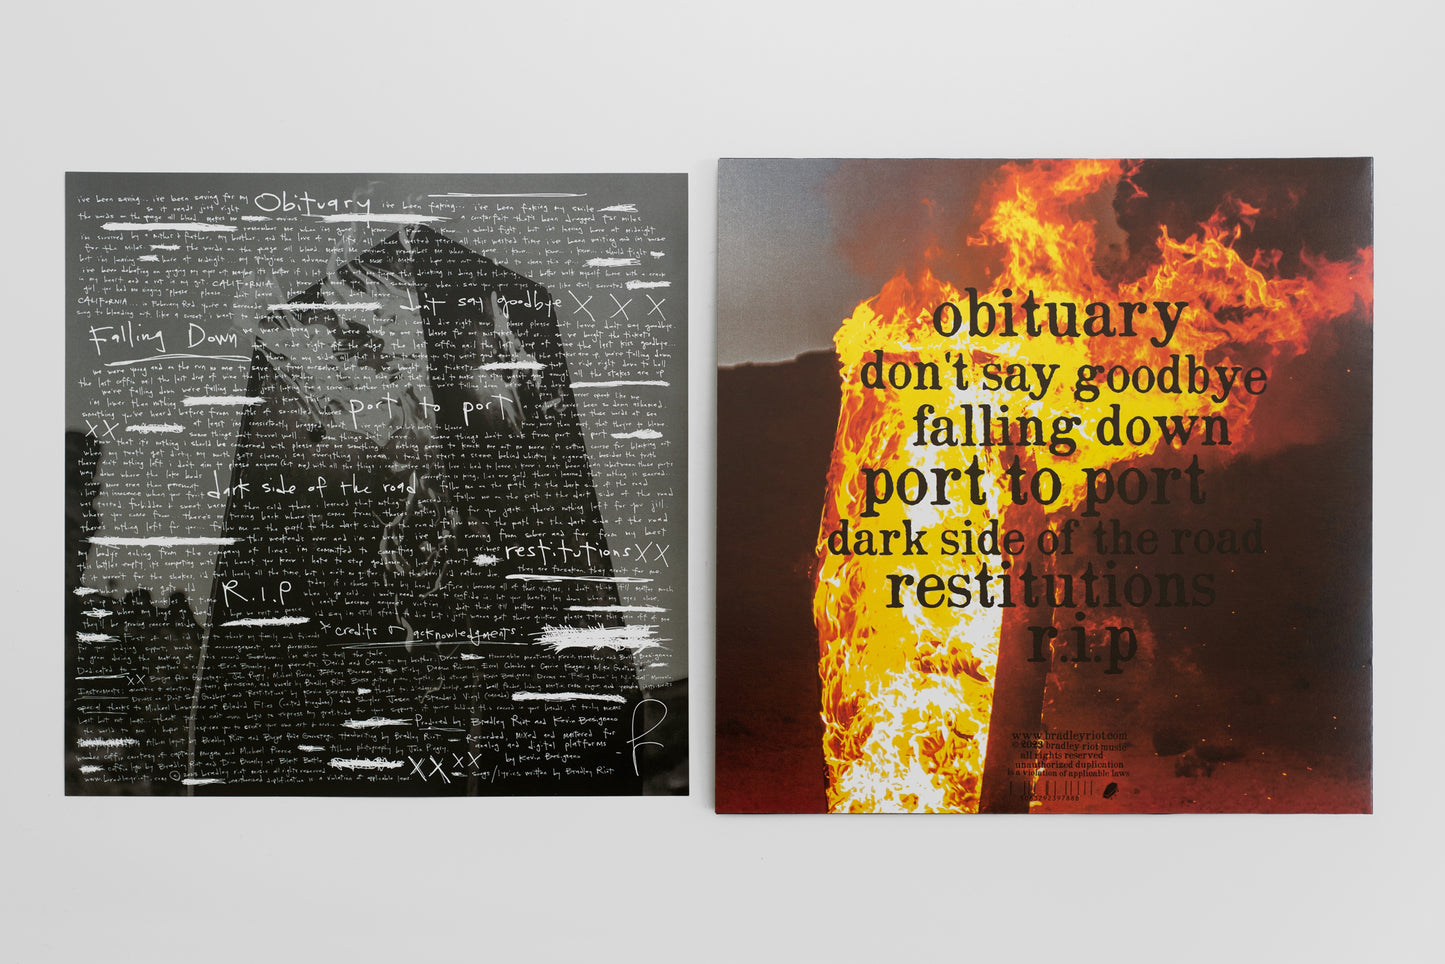 Bradley Riot "Dark Side of the Road" - DELUXE Vinyl Record